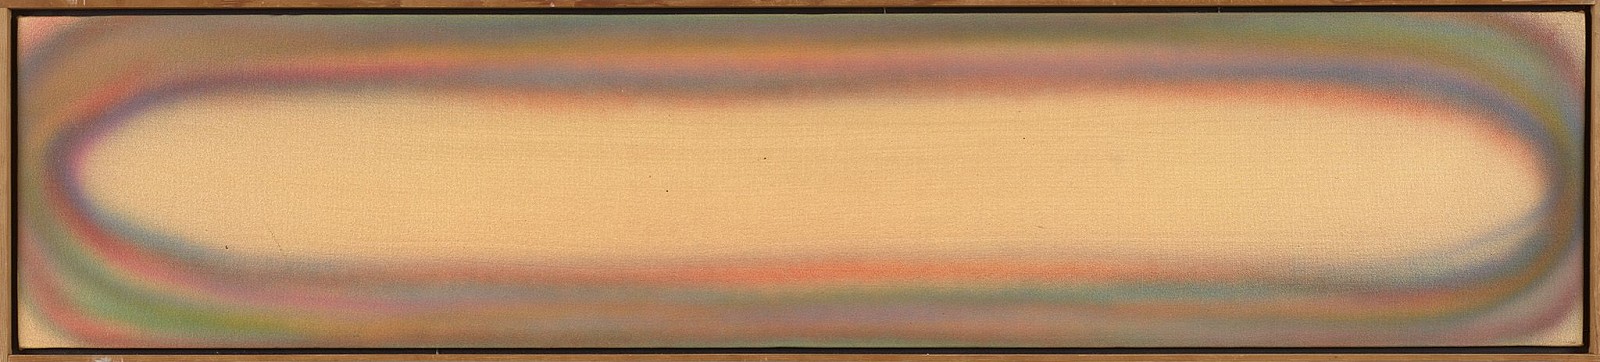 Dan Christensen, Untitled, 1988
Acrylic on canvas, 11 x 52 in. (27.9 x 132.1 cm)
CHR-00228